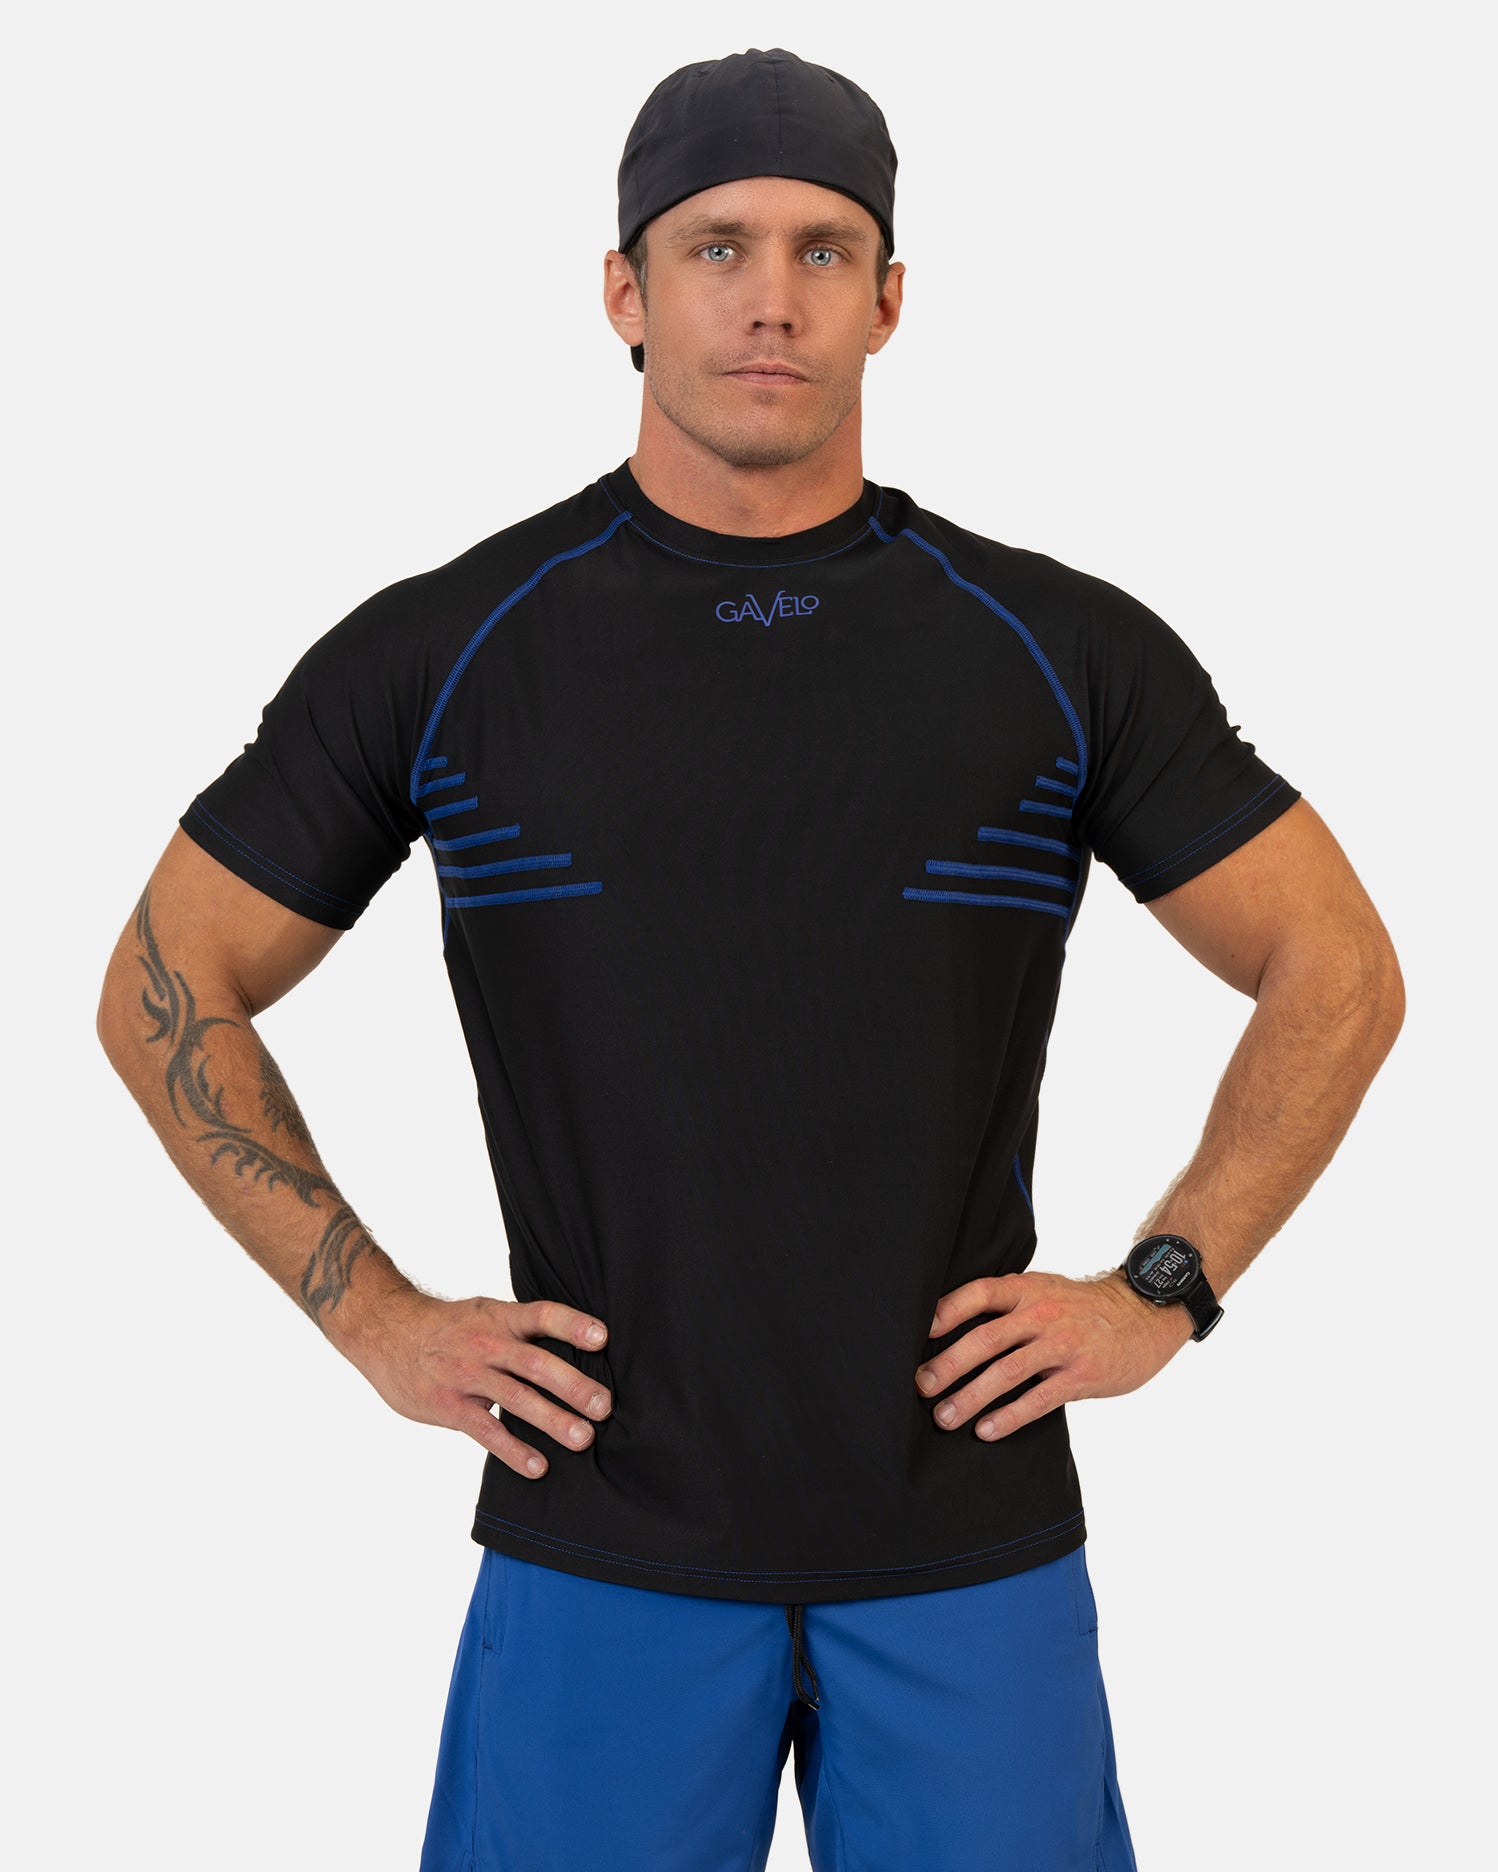 GAVELO Performance Blueline Rashguard T-shirt